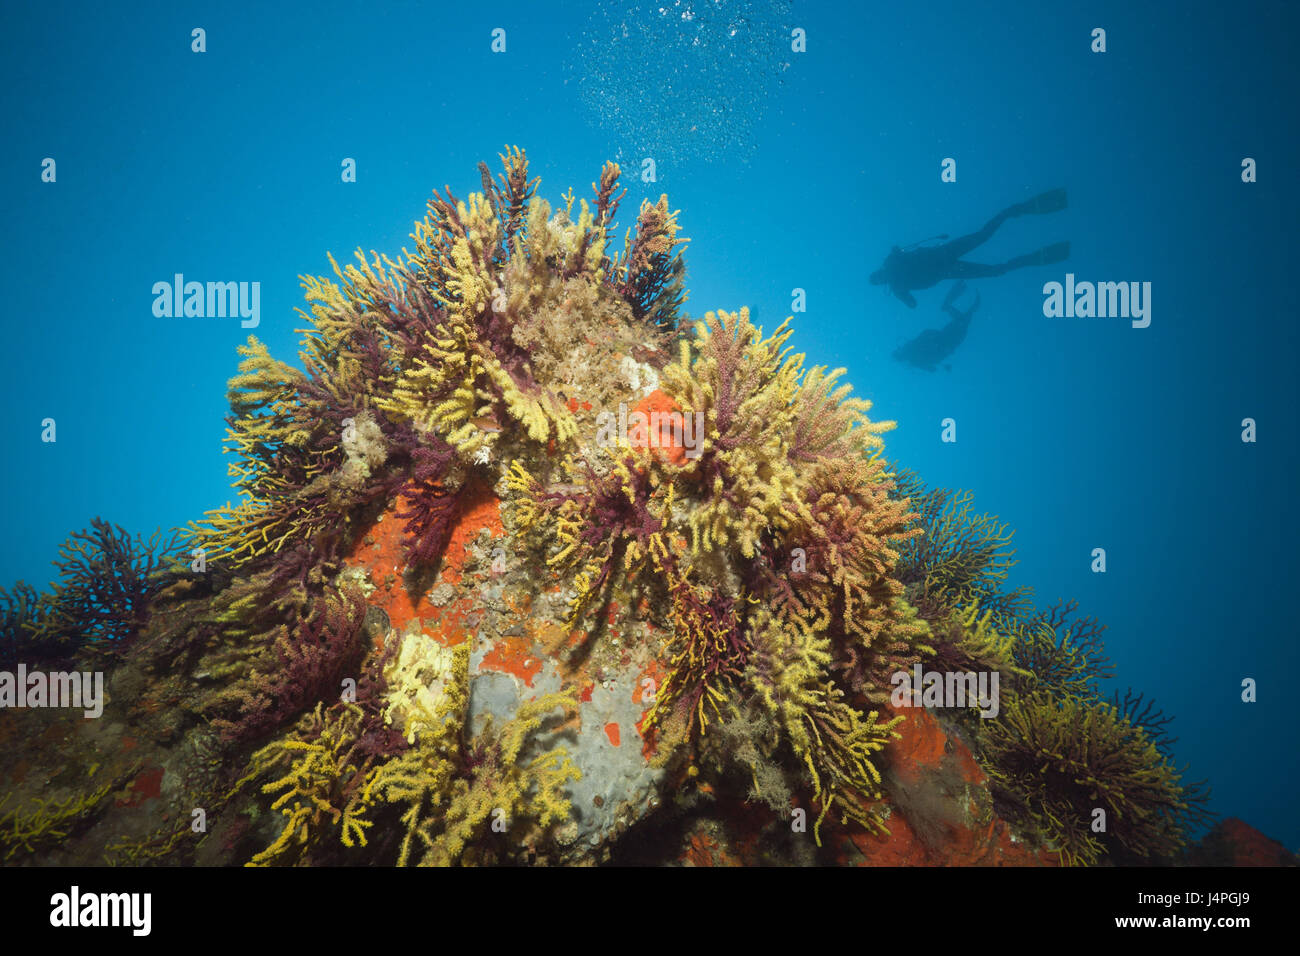 Diver, coral reef, Gorgonien, Paramuricea clavata, Tamariu, Costa Brava, the Mediterranean Sea, Spain, Stock Photo